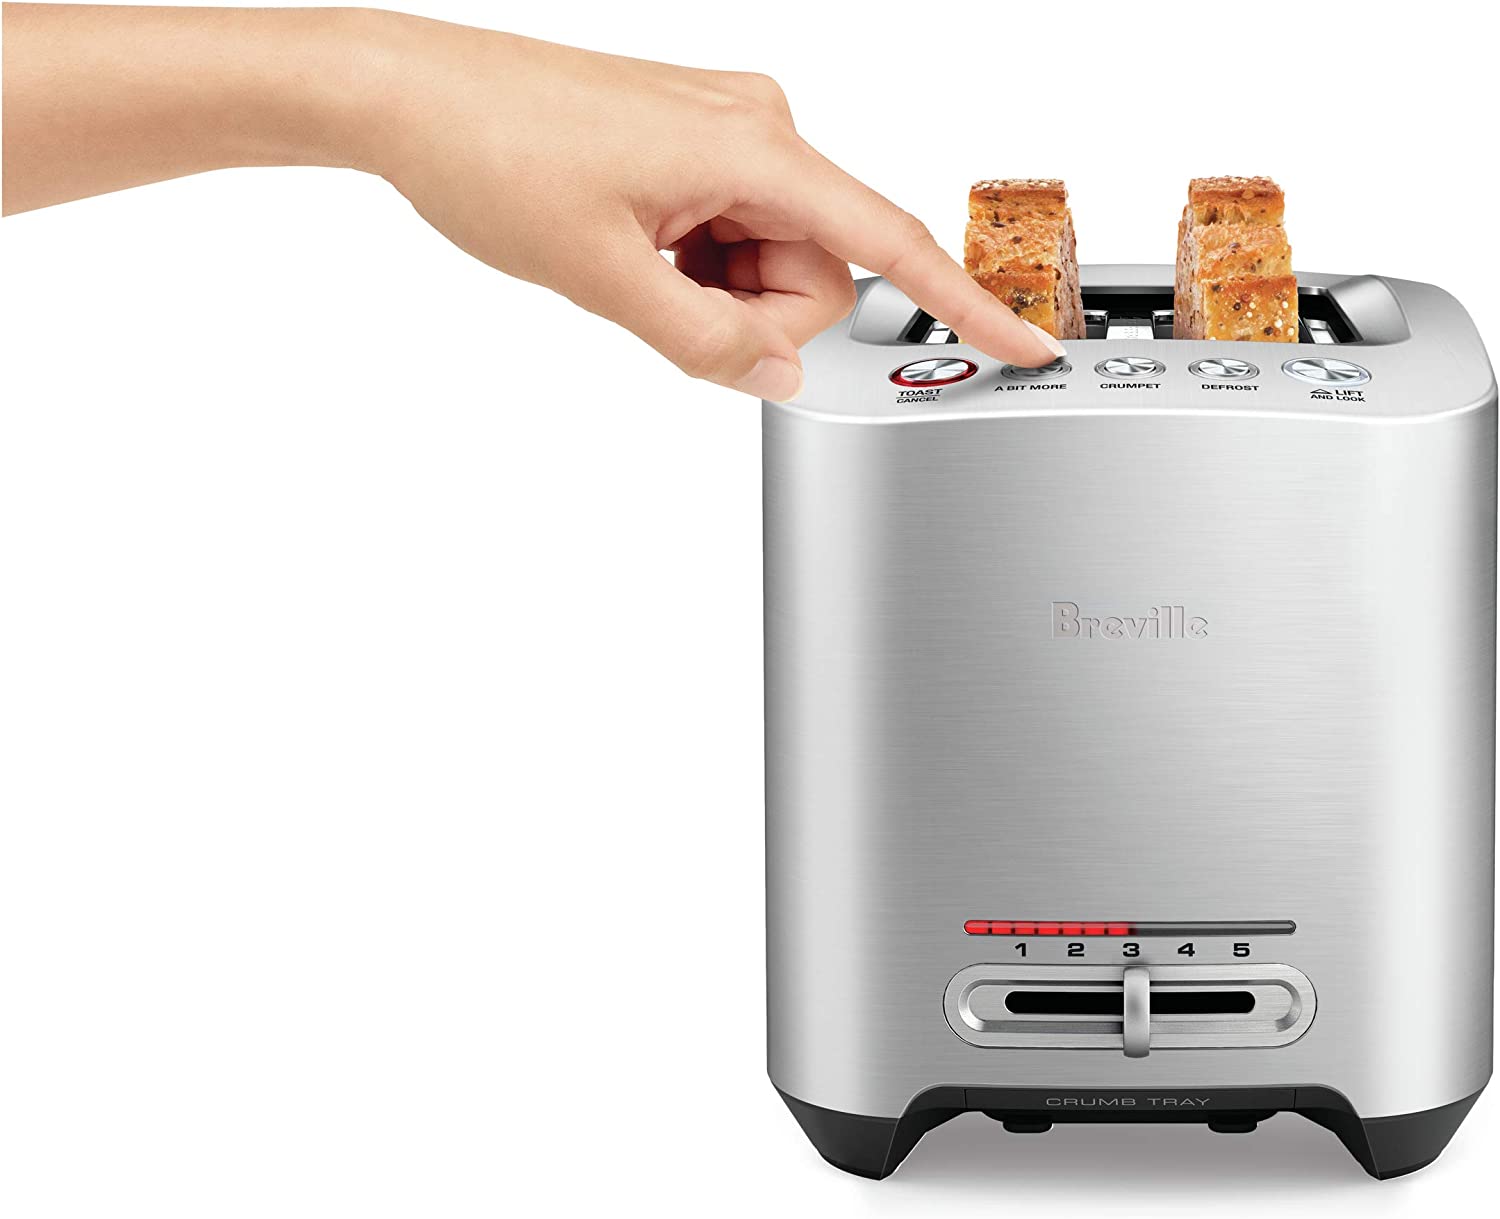 Bit More 4-Slice Toaster, Brushed Stainless Steel, BTA730XL